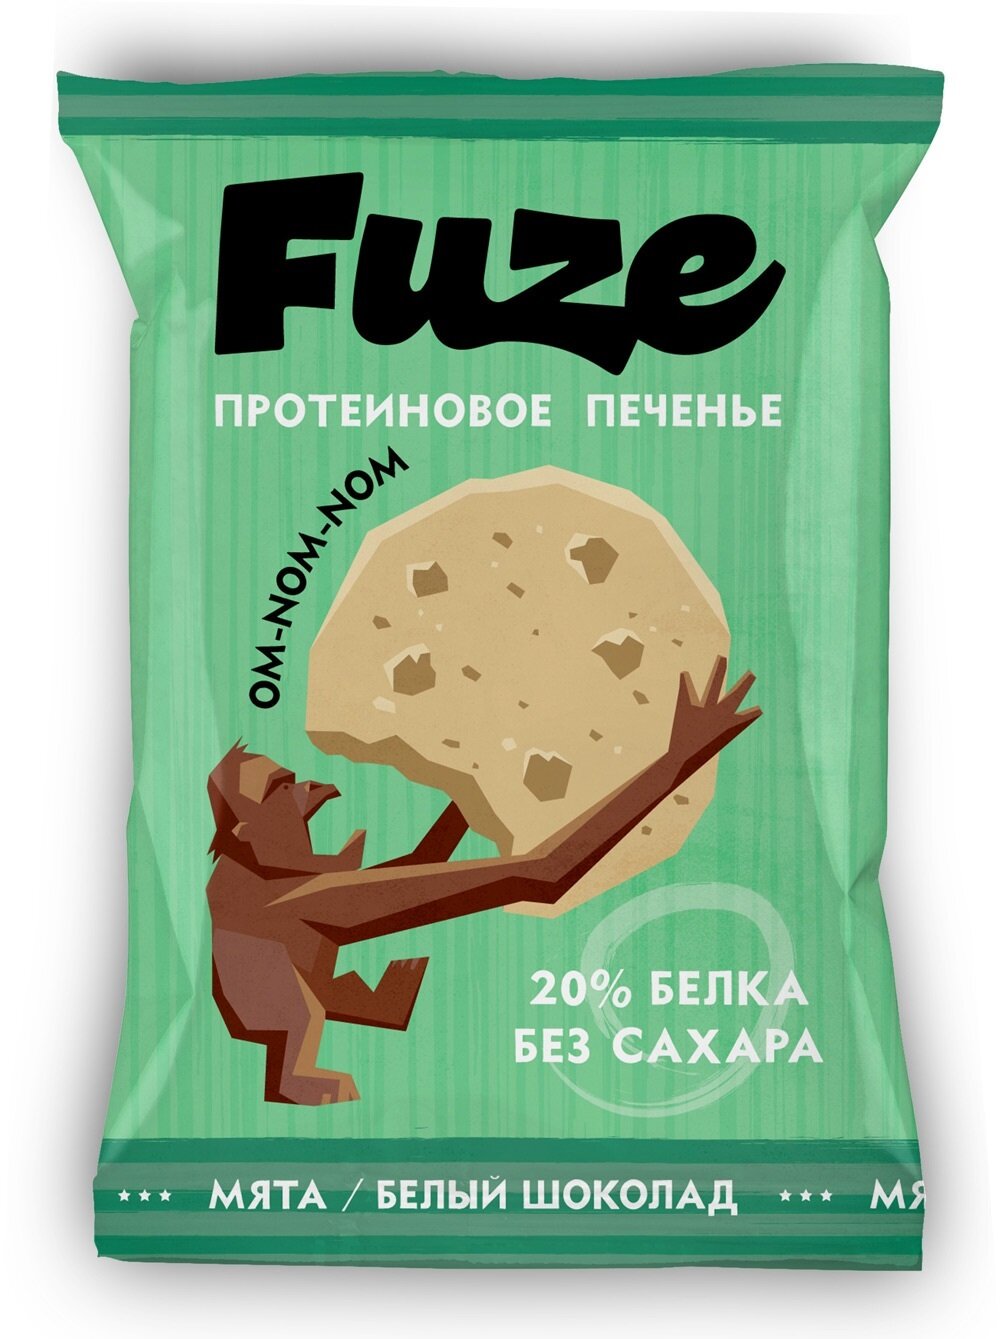 Печенье протеиновое без сахара Fuze. Вкус Мята-белый шоколад (бокс = 9 уп.)